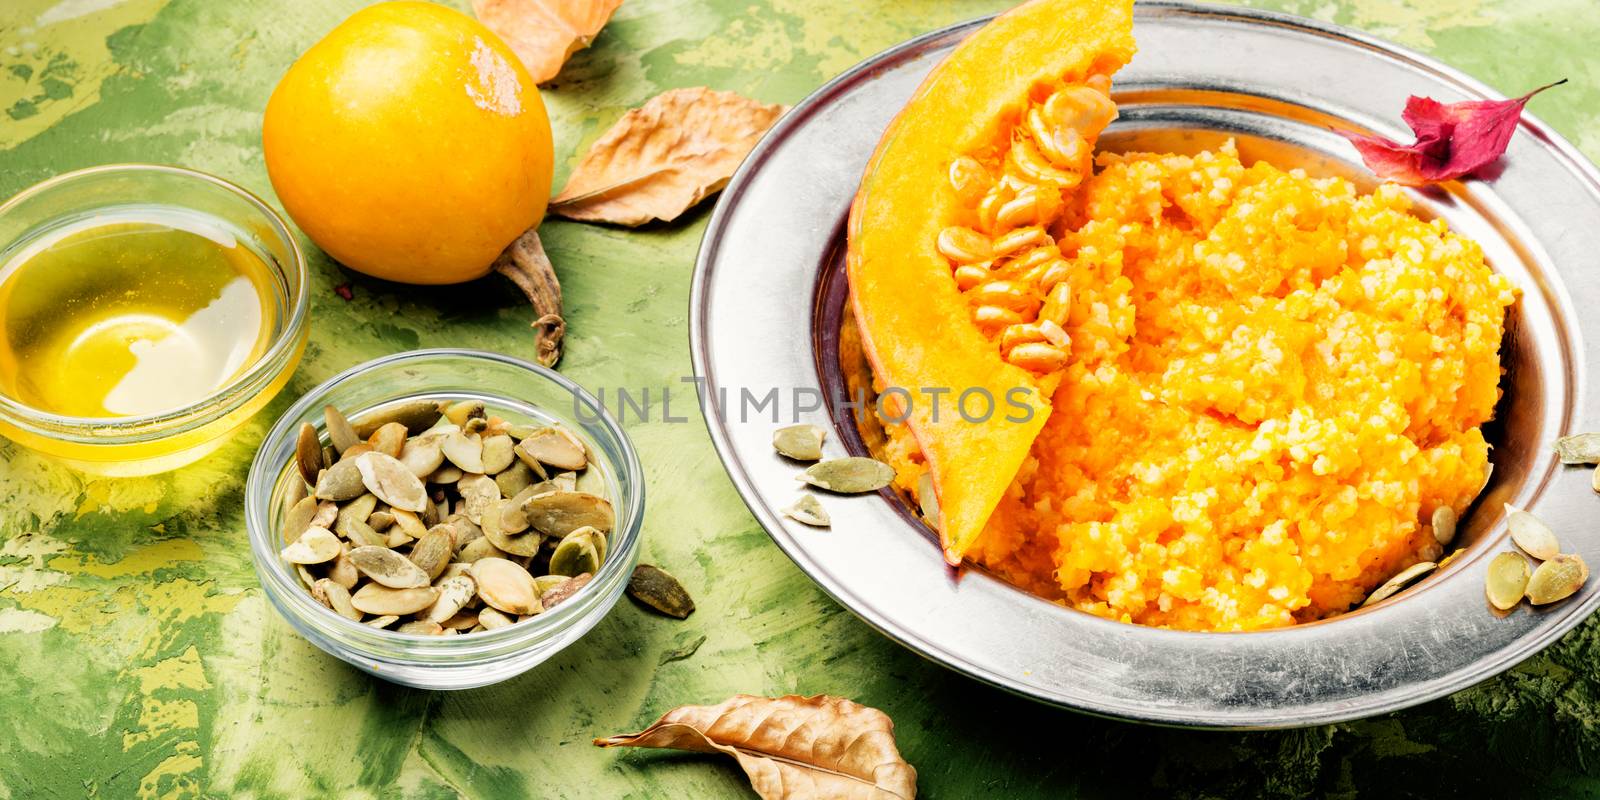 Pumpkin porridge and pumpkins by LMykola